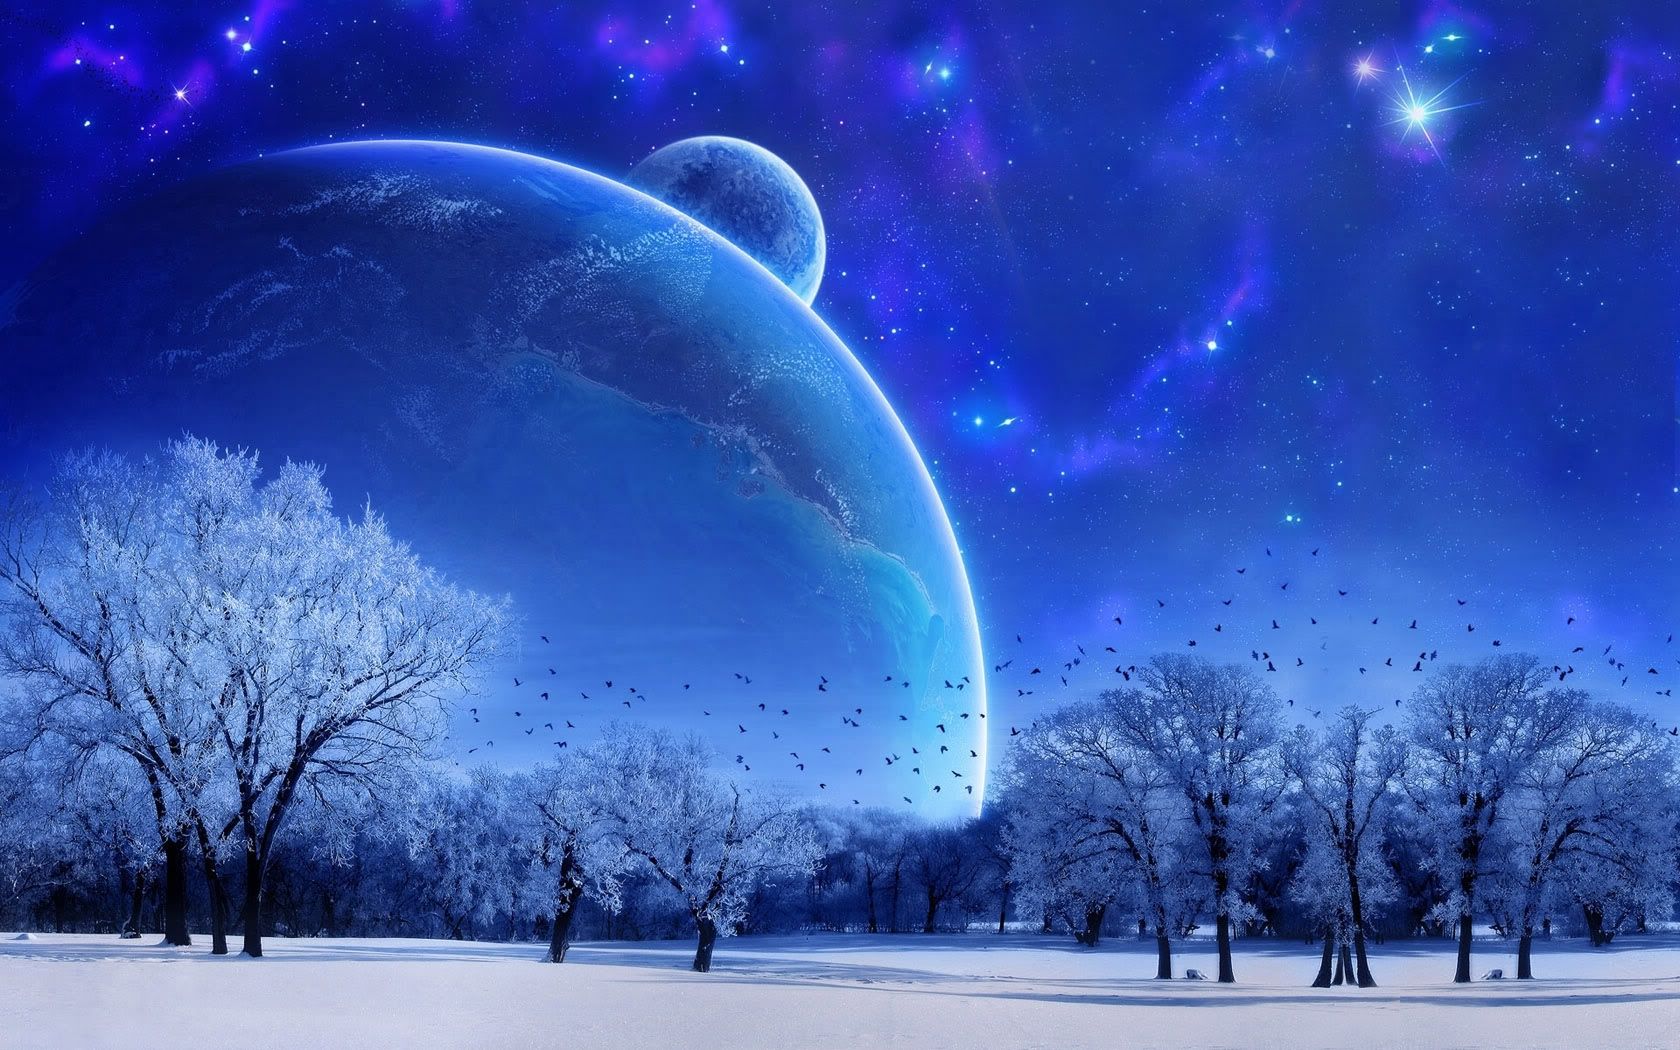 ice moon. Winter wallpaper, Winter scenes, Winter background